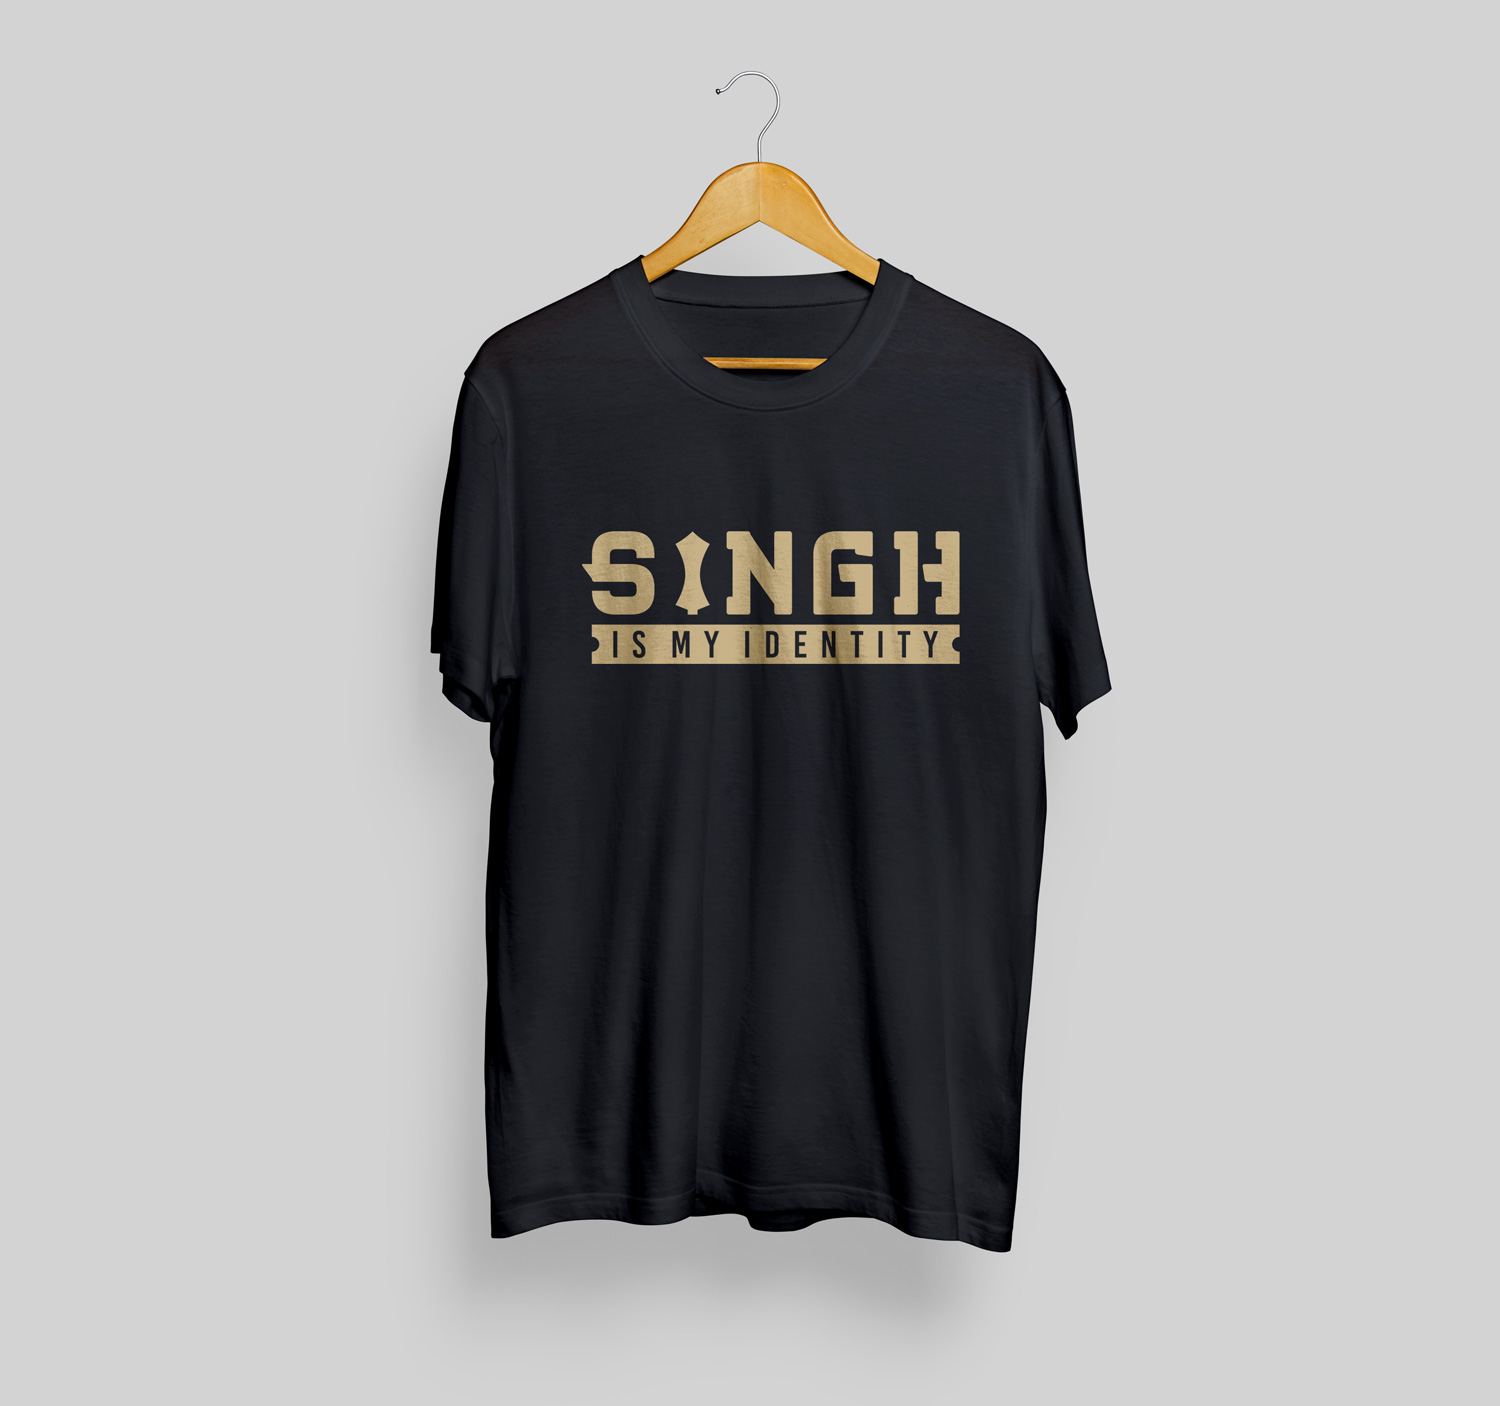 Singh Kaur T-shirt Design